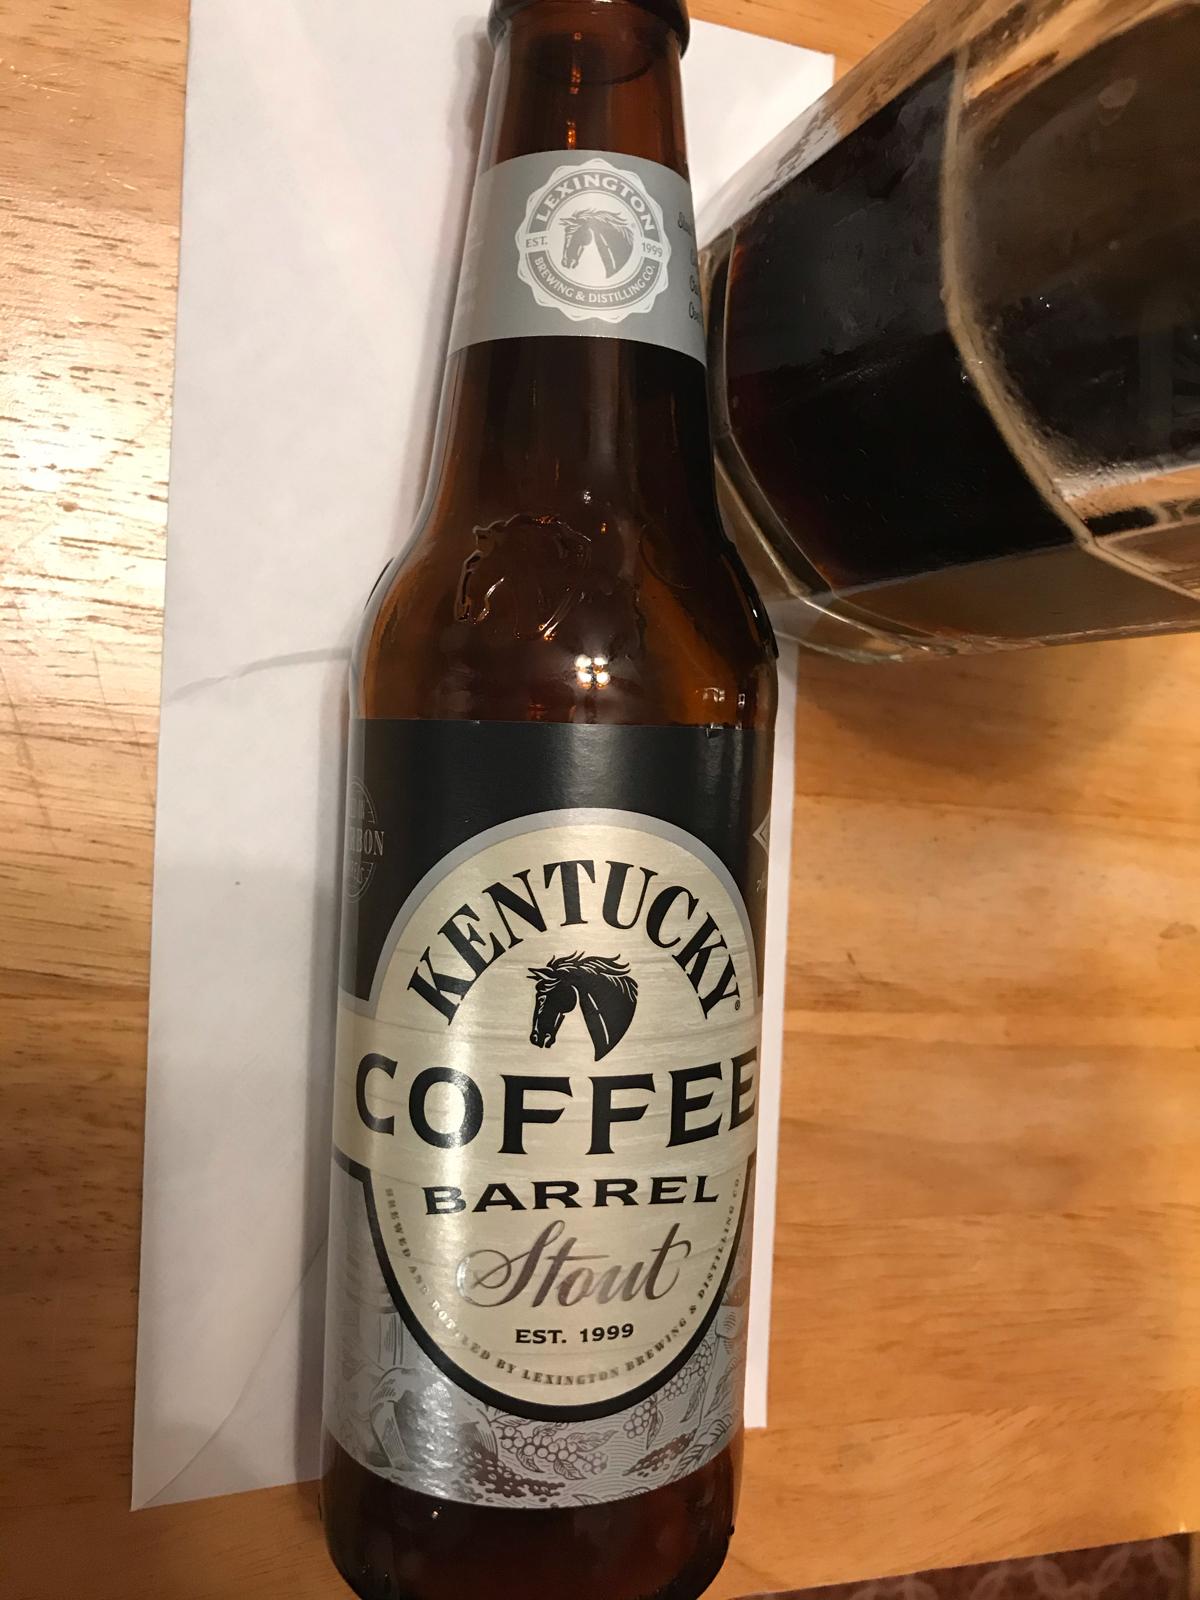 Kentucky Coffee Barrel Stout